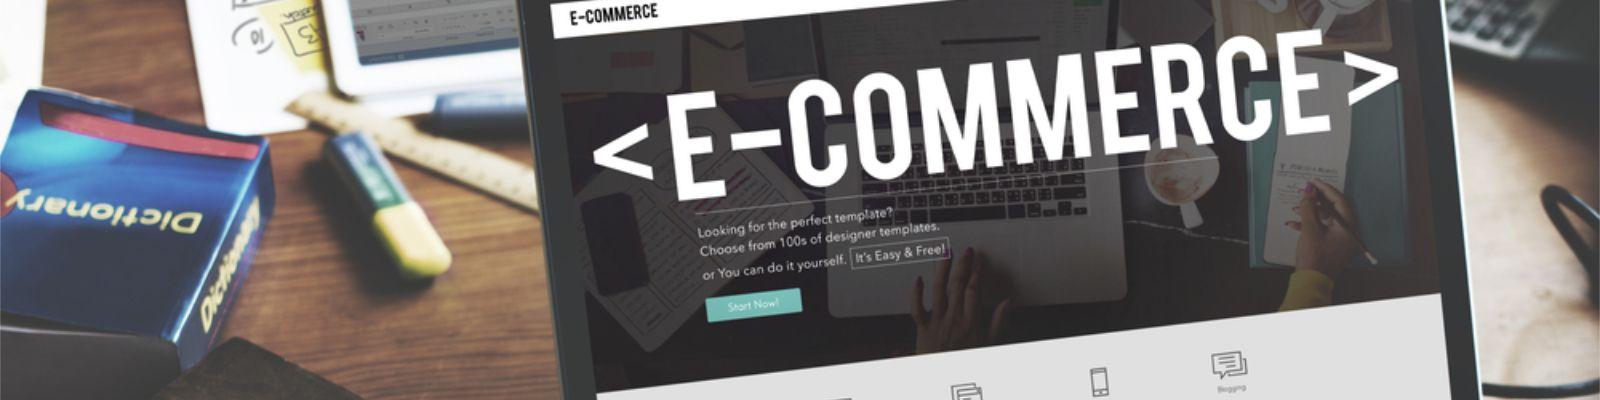 Parallex_Pro Ecommerce Website Package £1549 + VAT